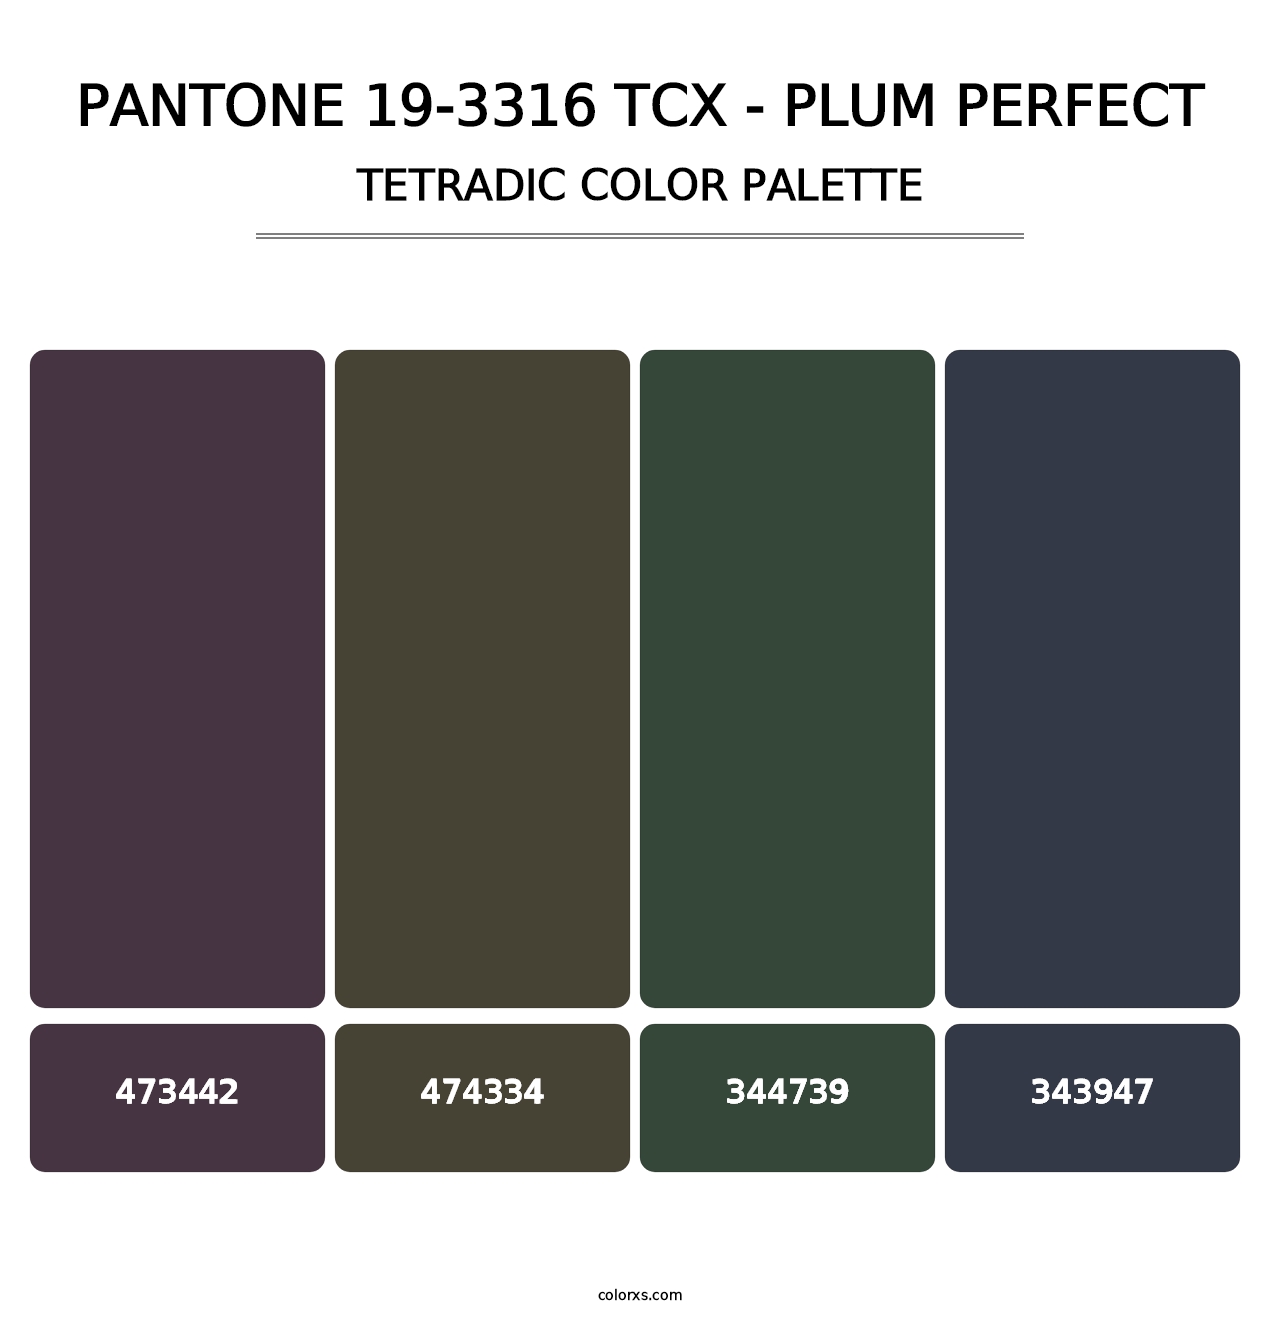 PANTONE 19-3316 TCX - Plum Perfect - Tetradic Color Palette